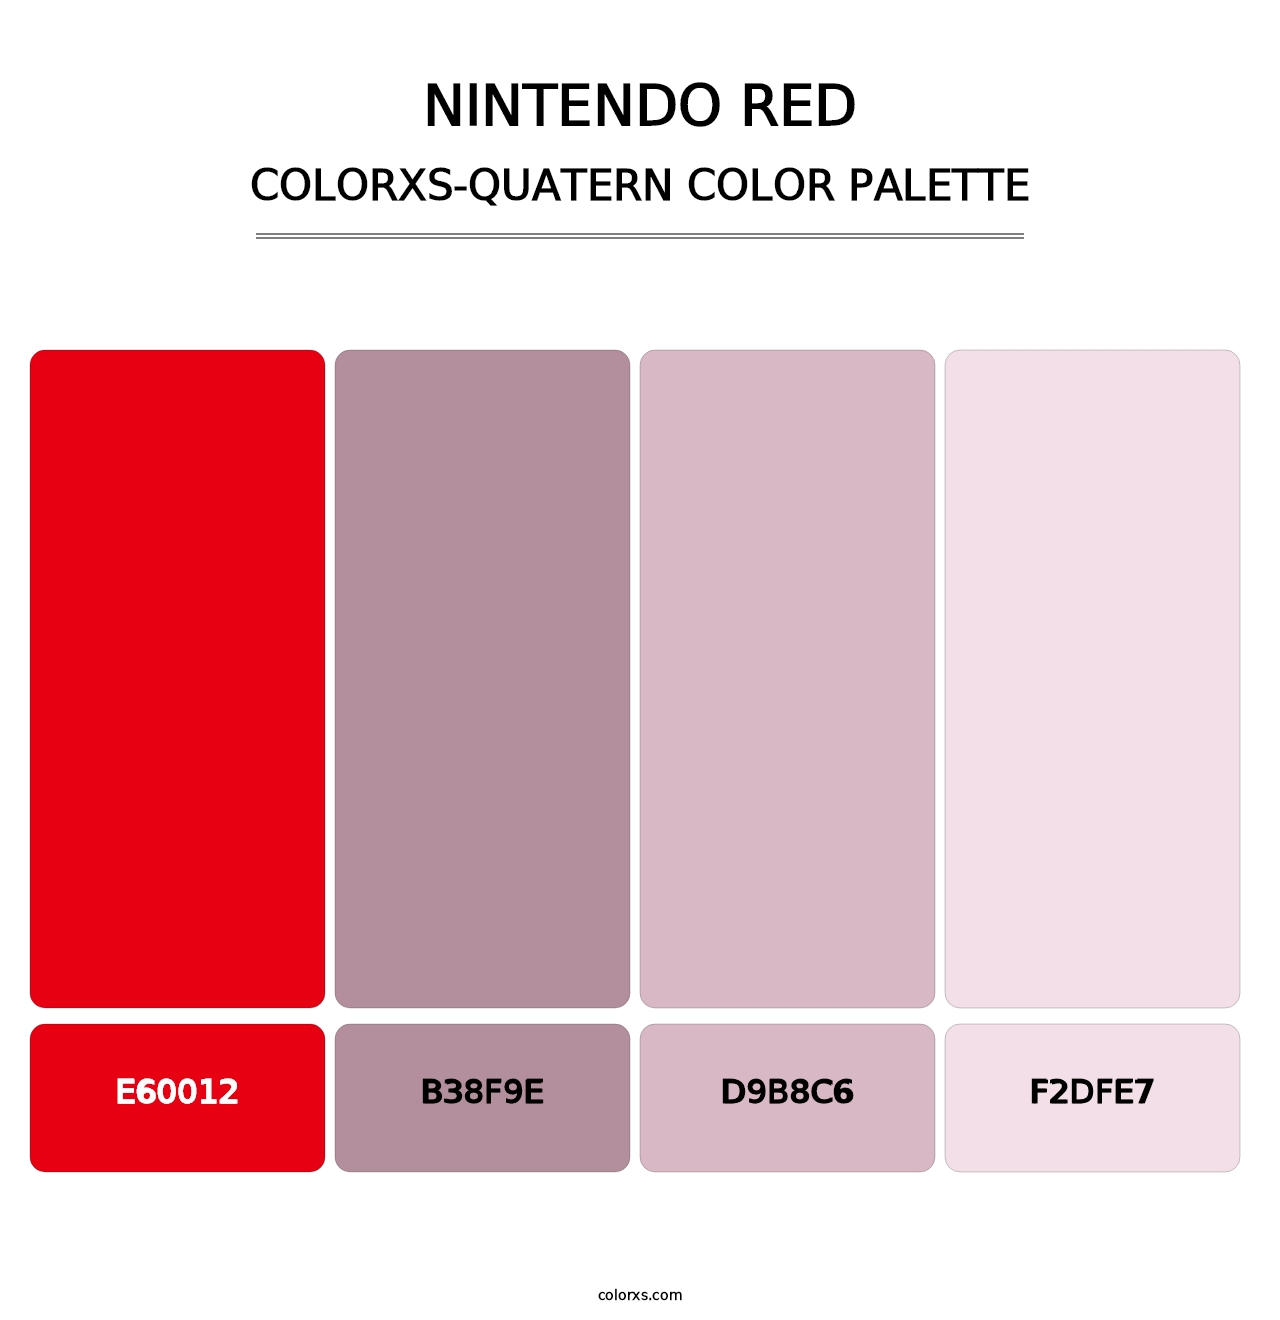 Nintendo Red - Colorxs Quatern Palette